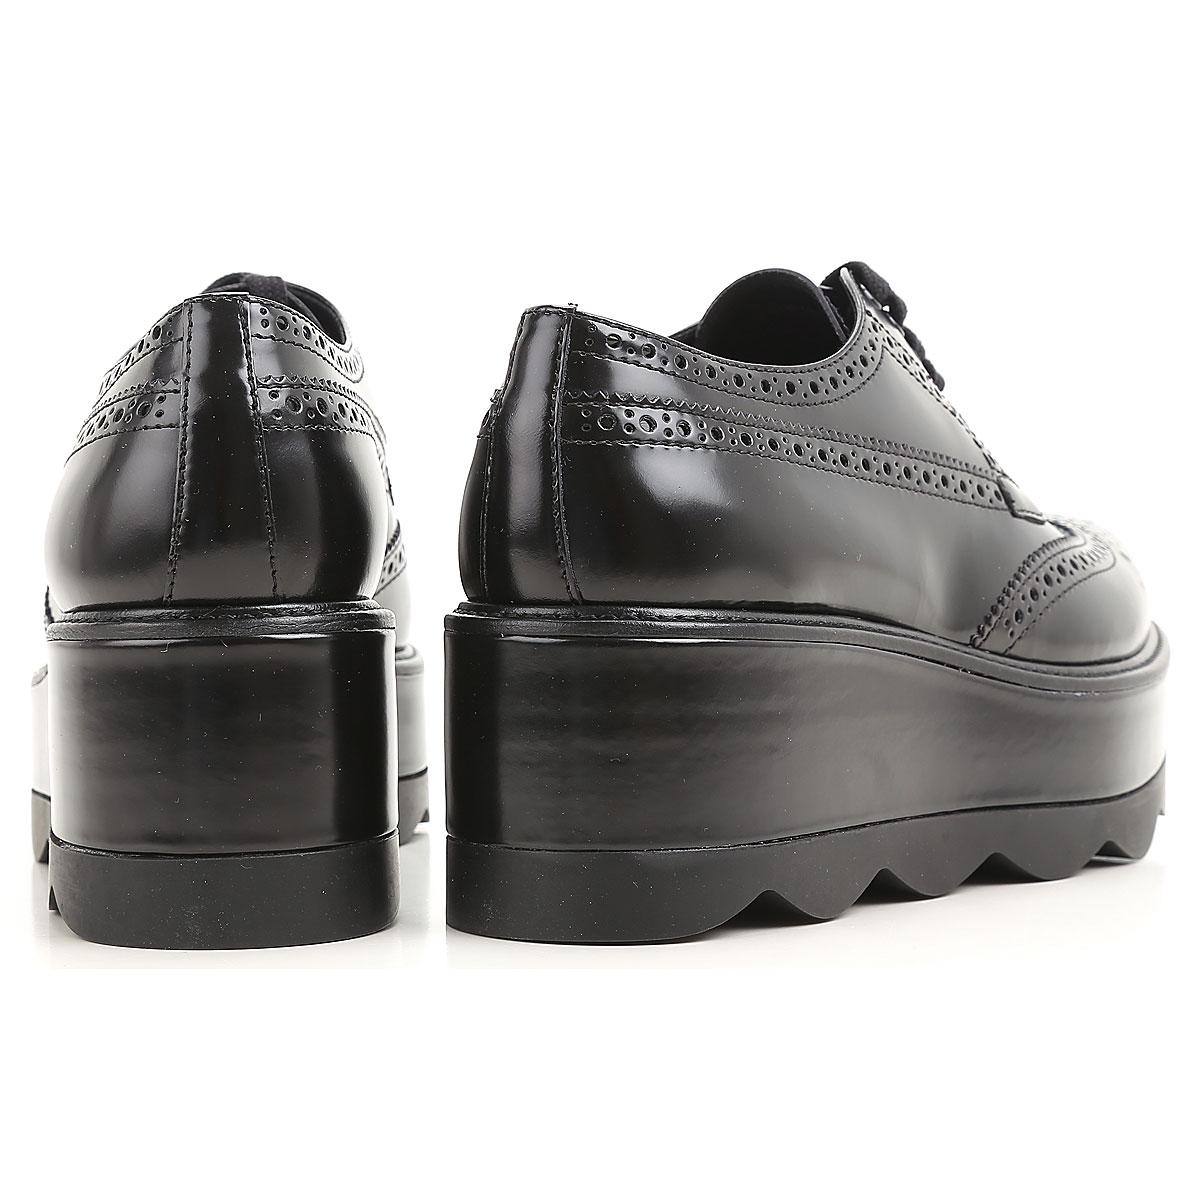 Lyst - Prada Shoes For Women in Black